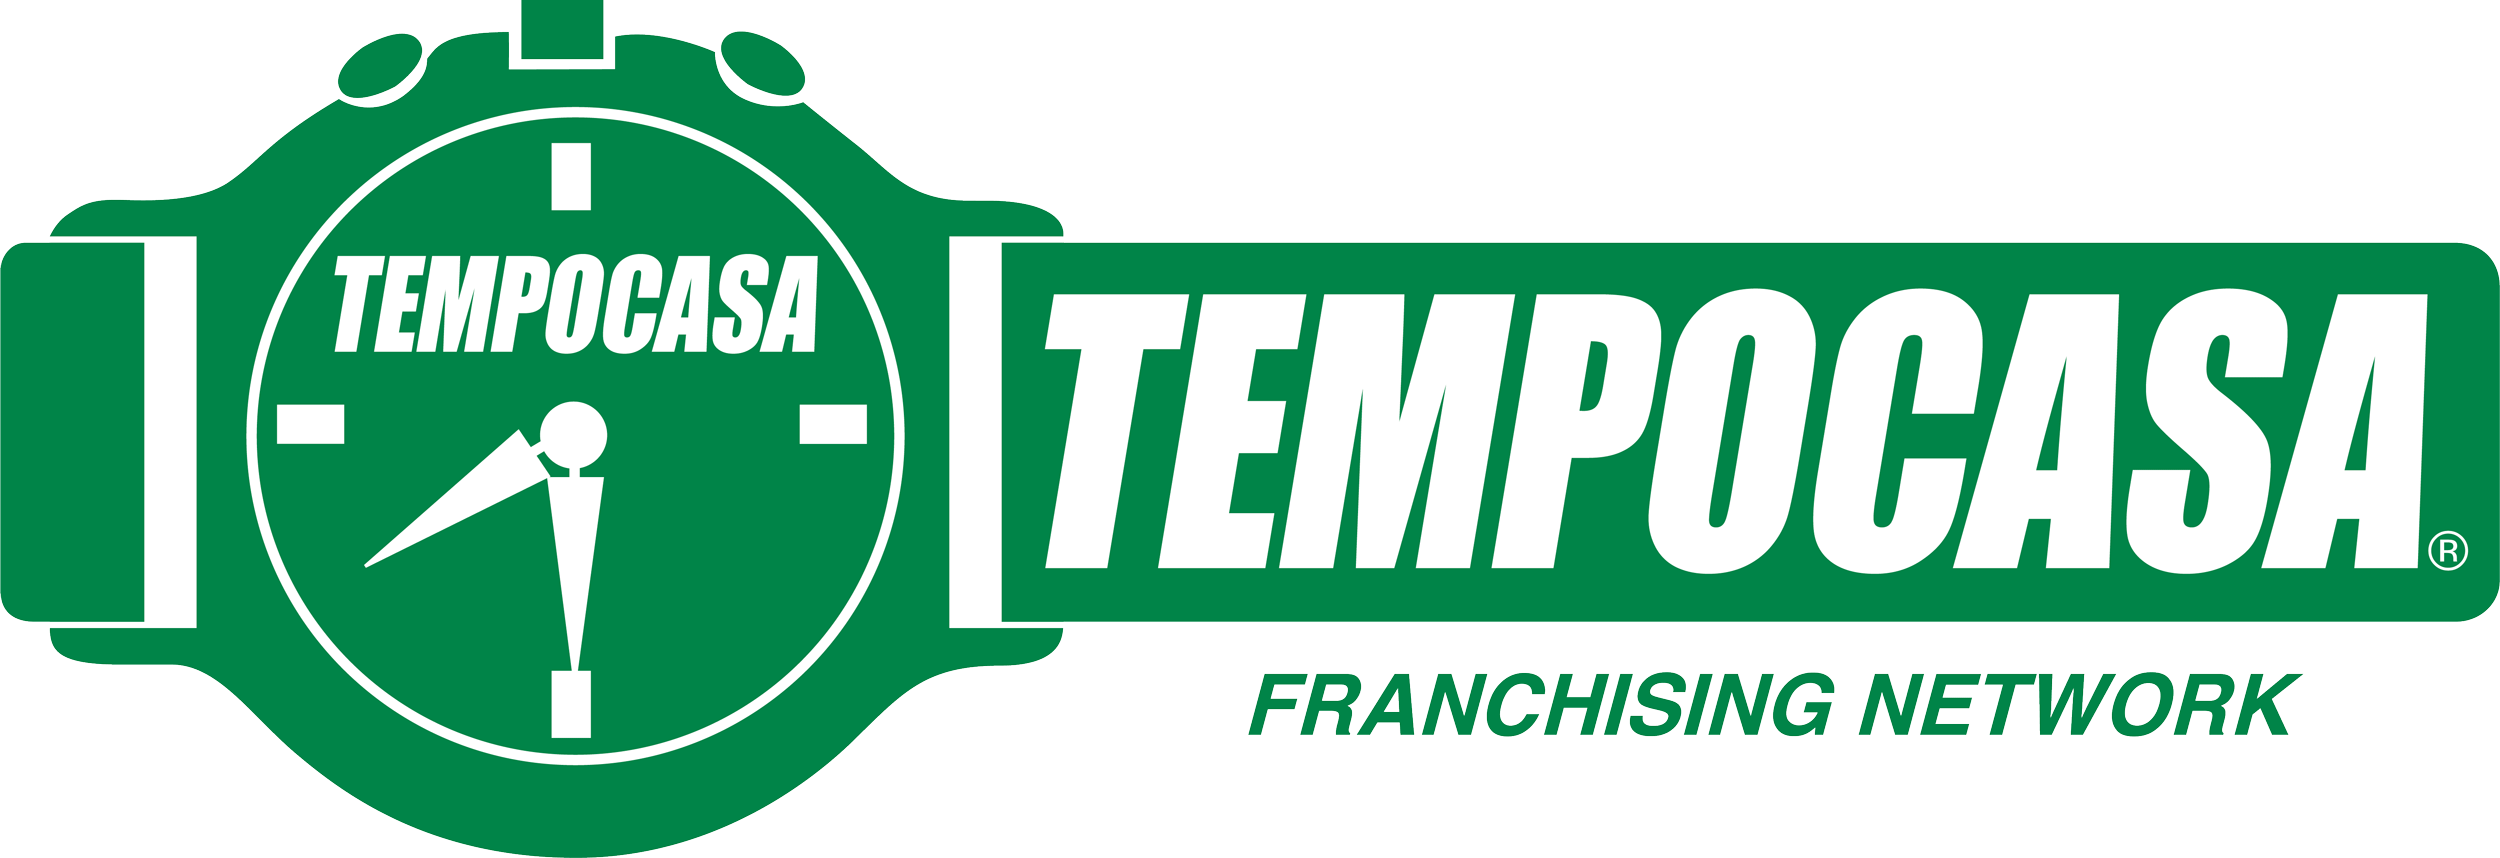 Tempoaffitti - Milano/Umbria - Tempocasa